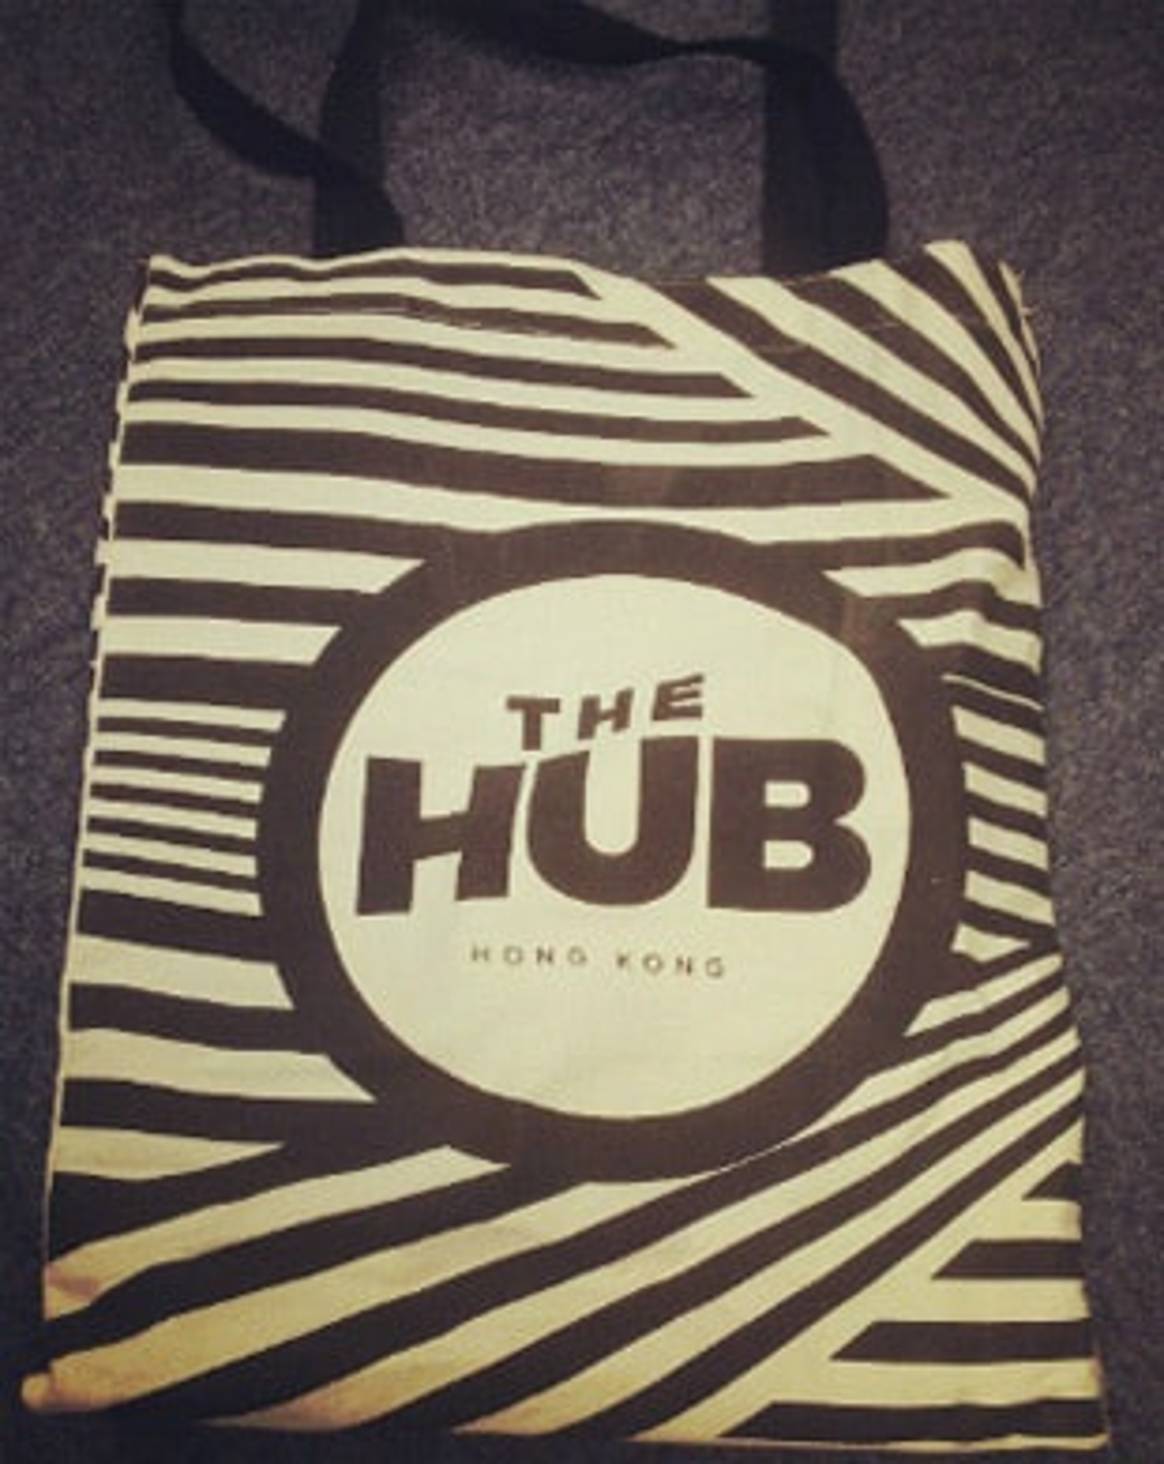 Bigger, better, more creative: Hong Kong's The HUB is back